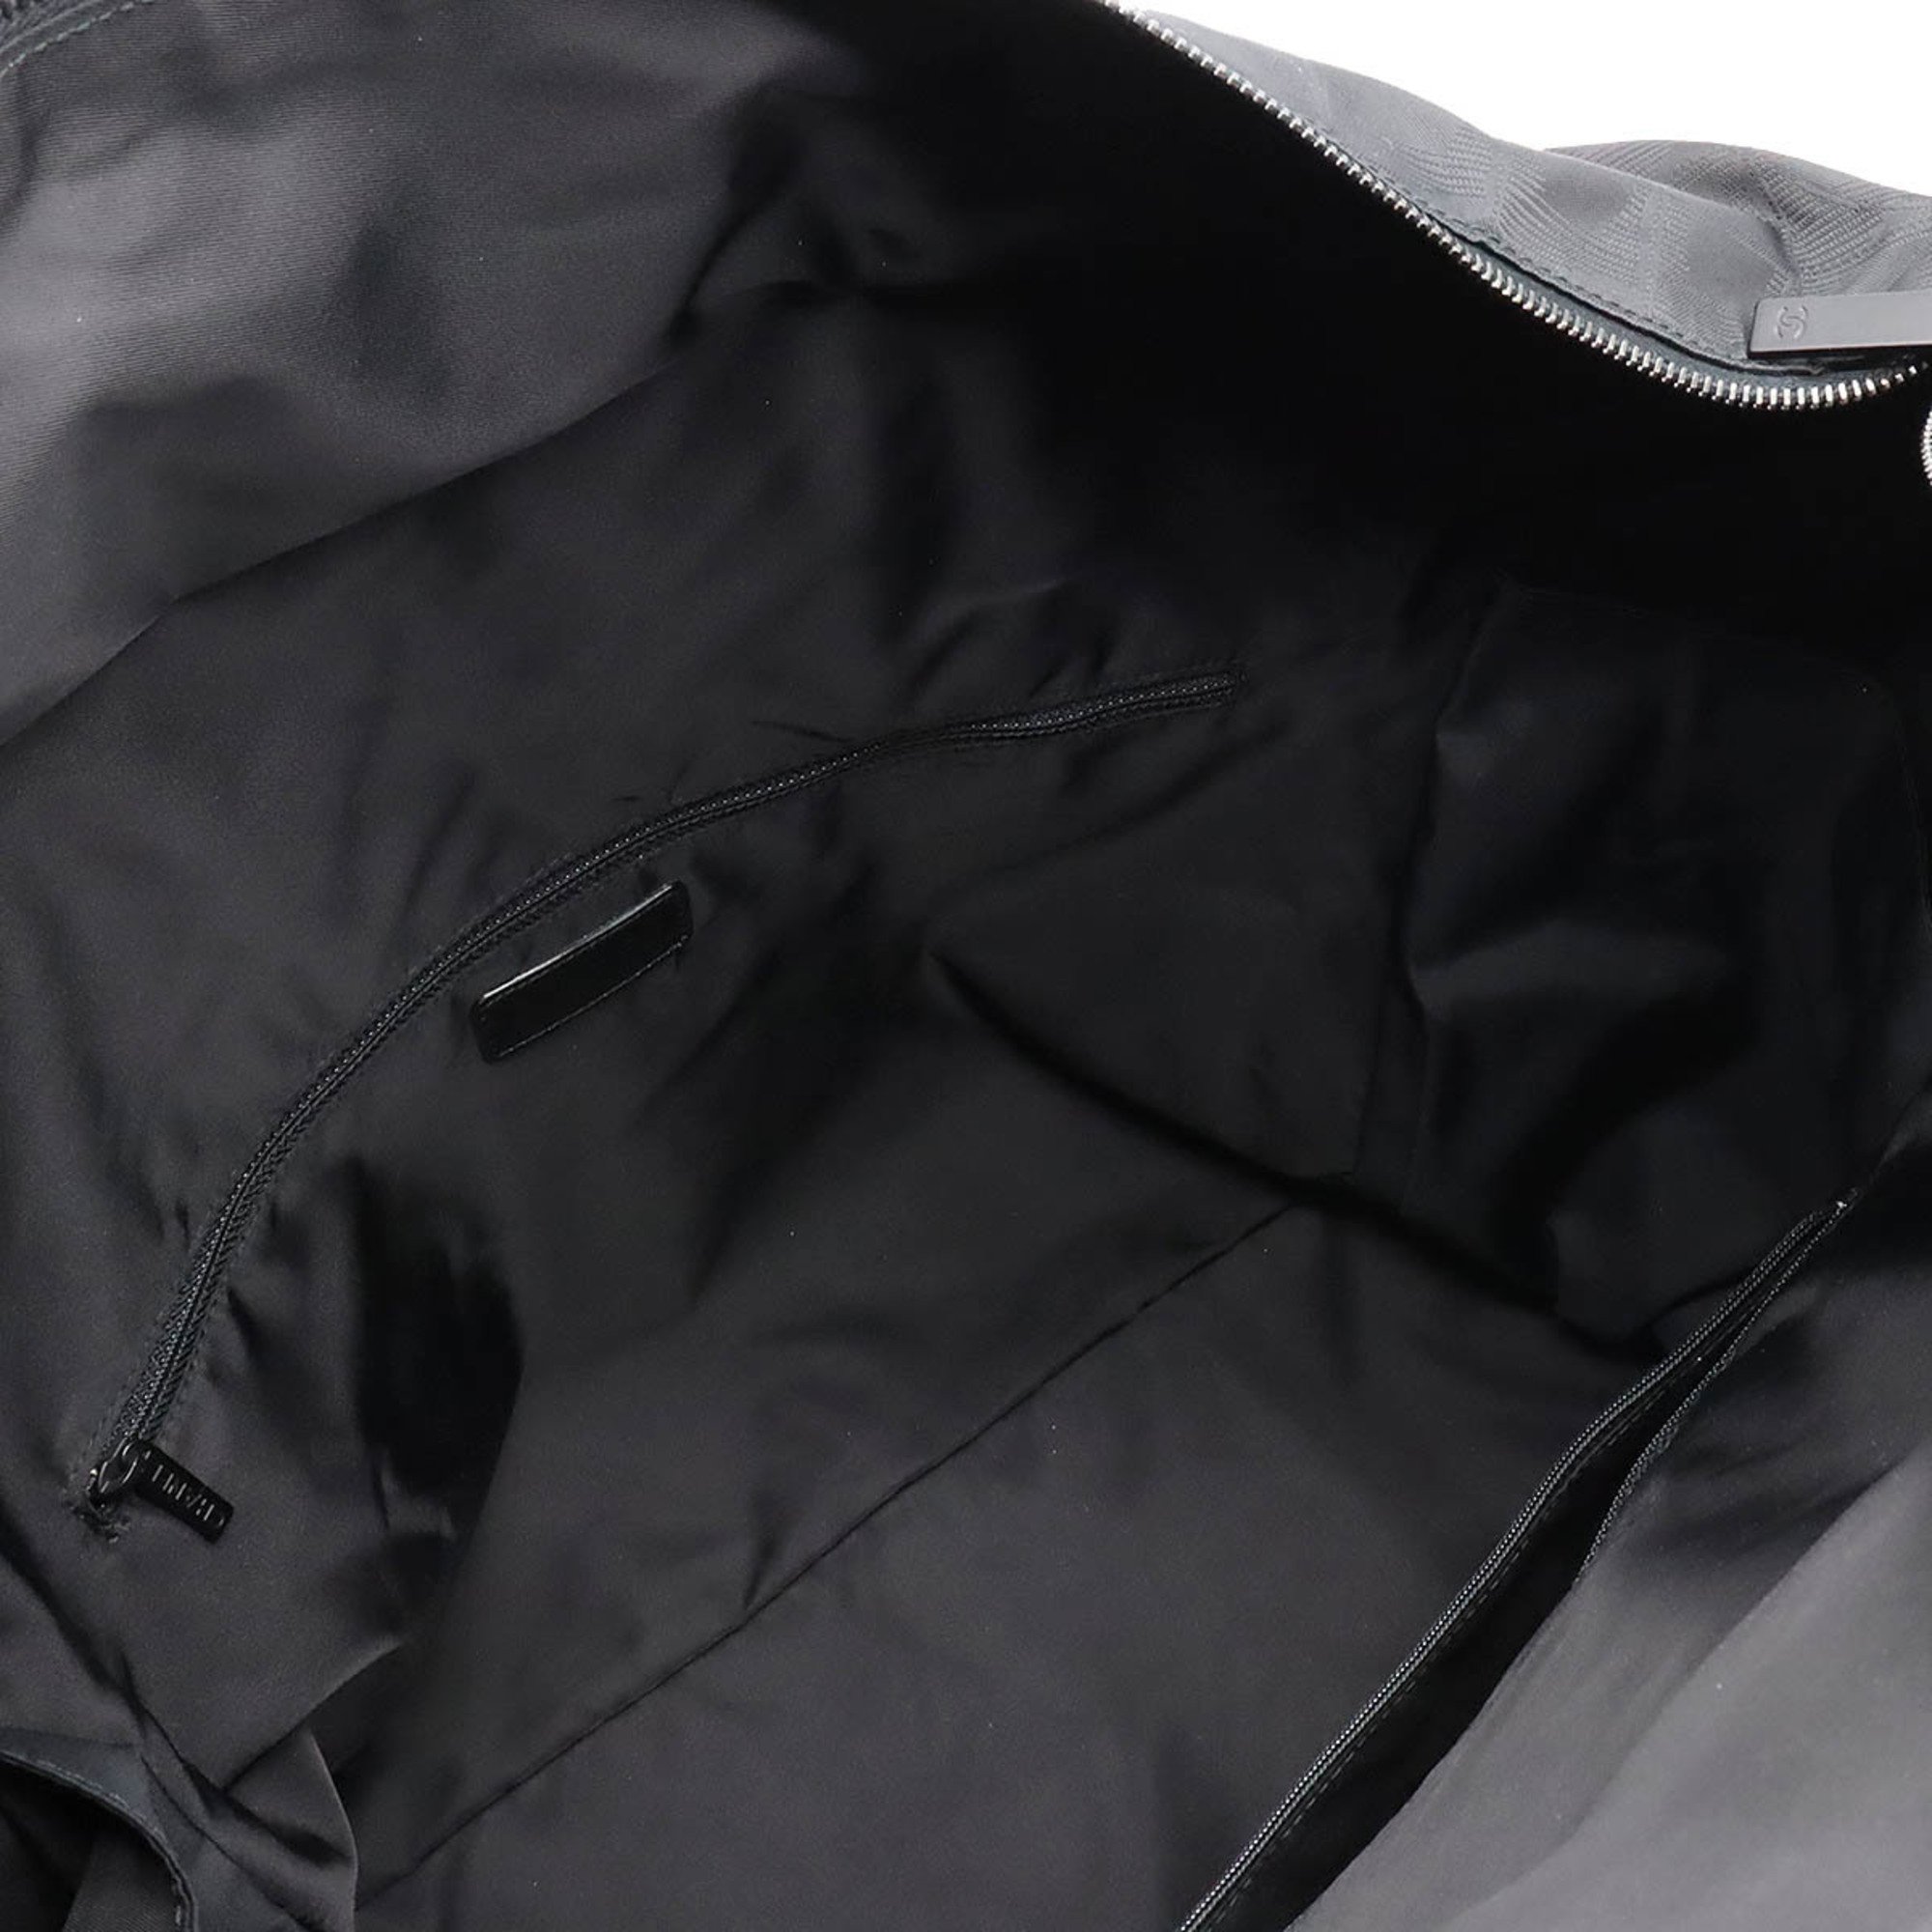 CHANEL New Line Tote TGM Bag Large Shoulder Nylon Jacquard Leather Black A15826